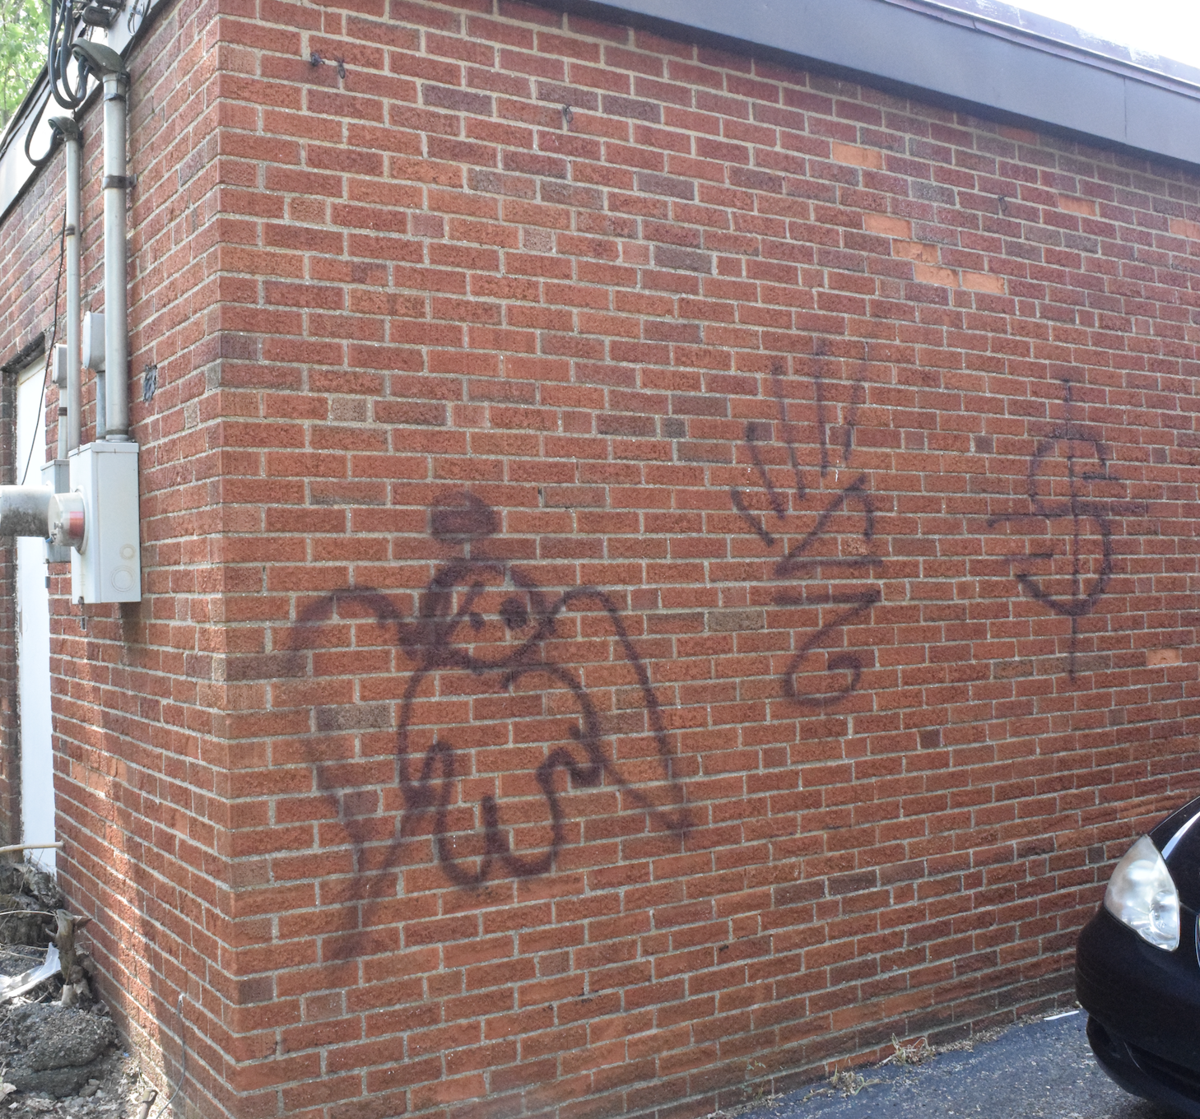 Swastika, graffiti found on University Heights buildings | Local News ...